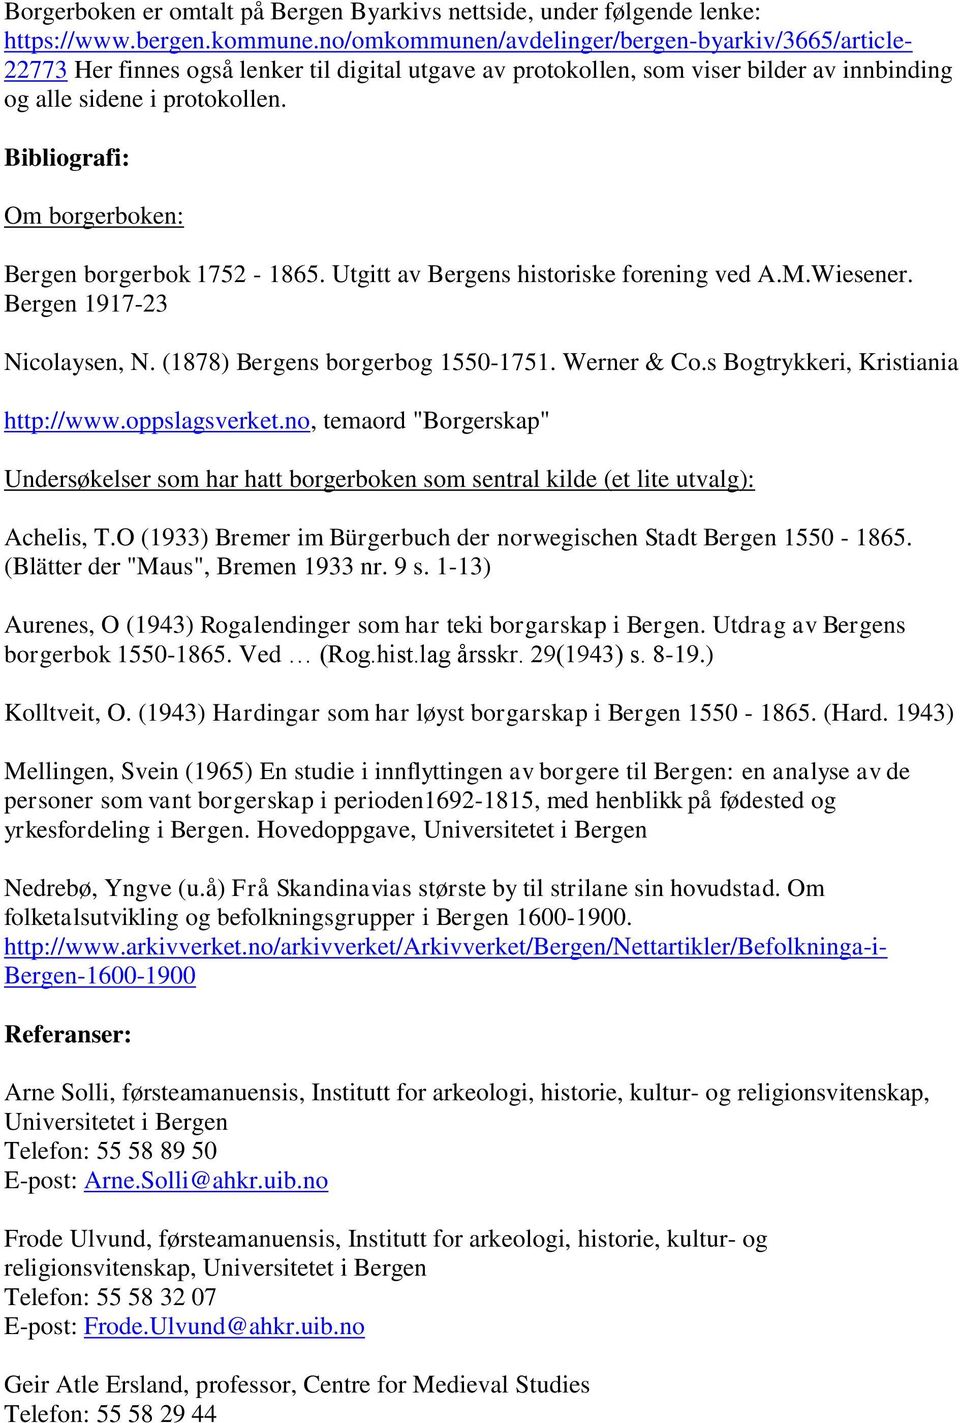 Bibliografi: Om borgerboken: Bergen borgerbok 1752-1865. Utgitt av Bergens historiske forening ved A.M.Wiesener. Bergen 1917-23 Nicolaysen, N. (1878) Bergens borgerbog 1550-1751. Werner & Co.